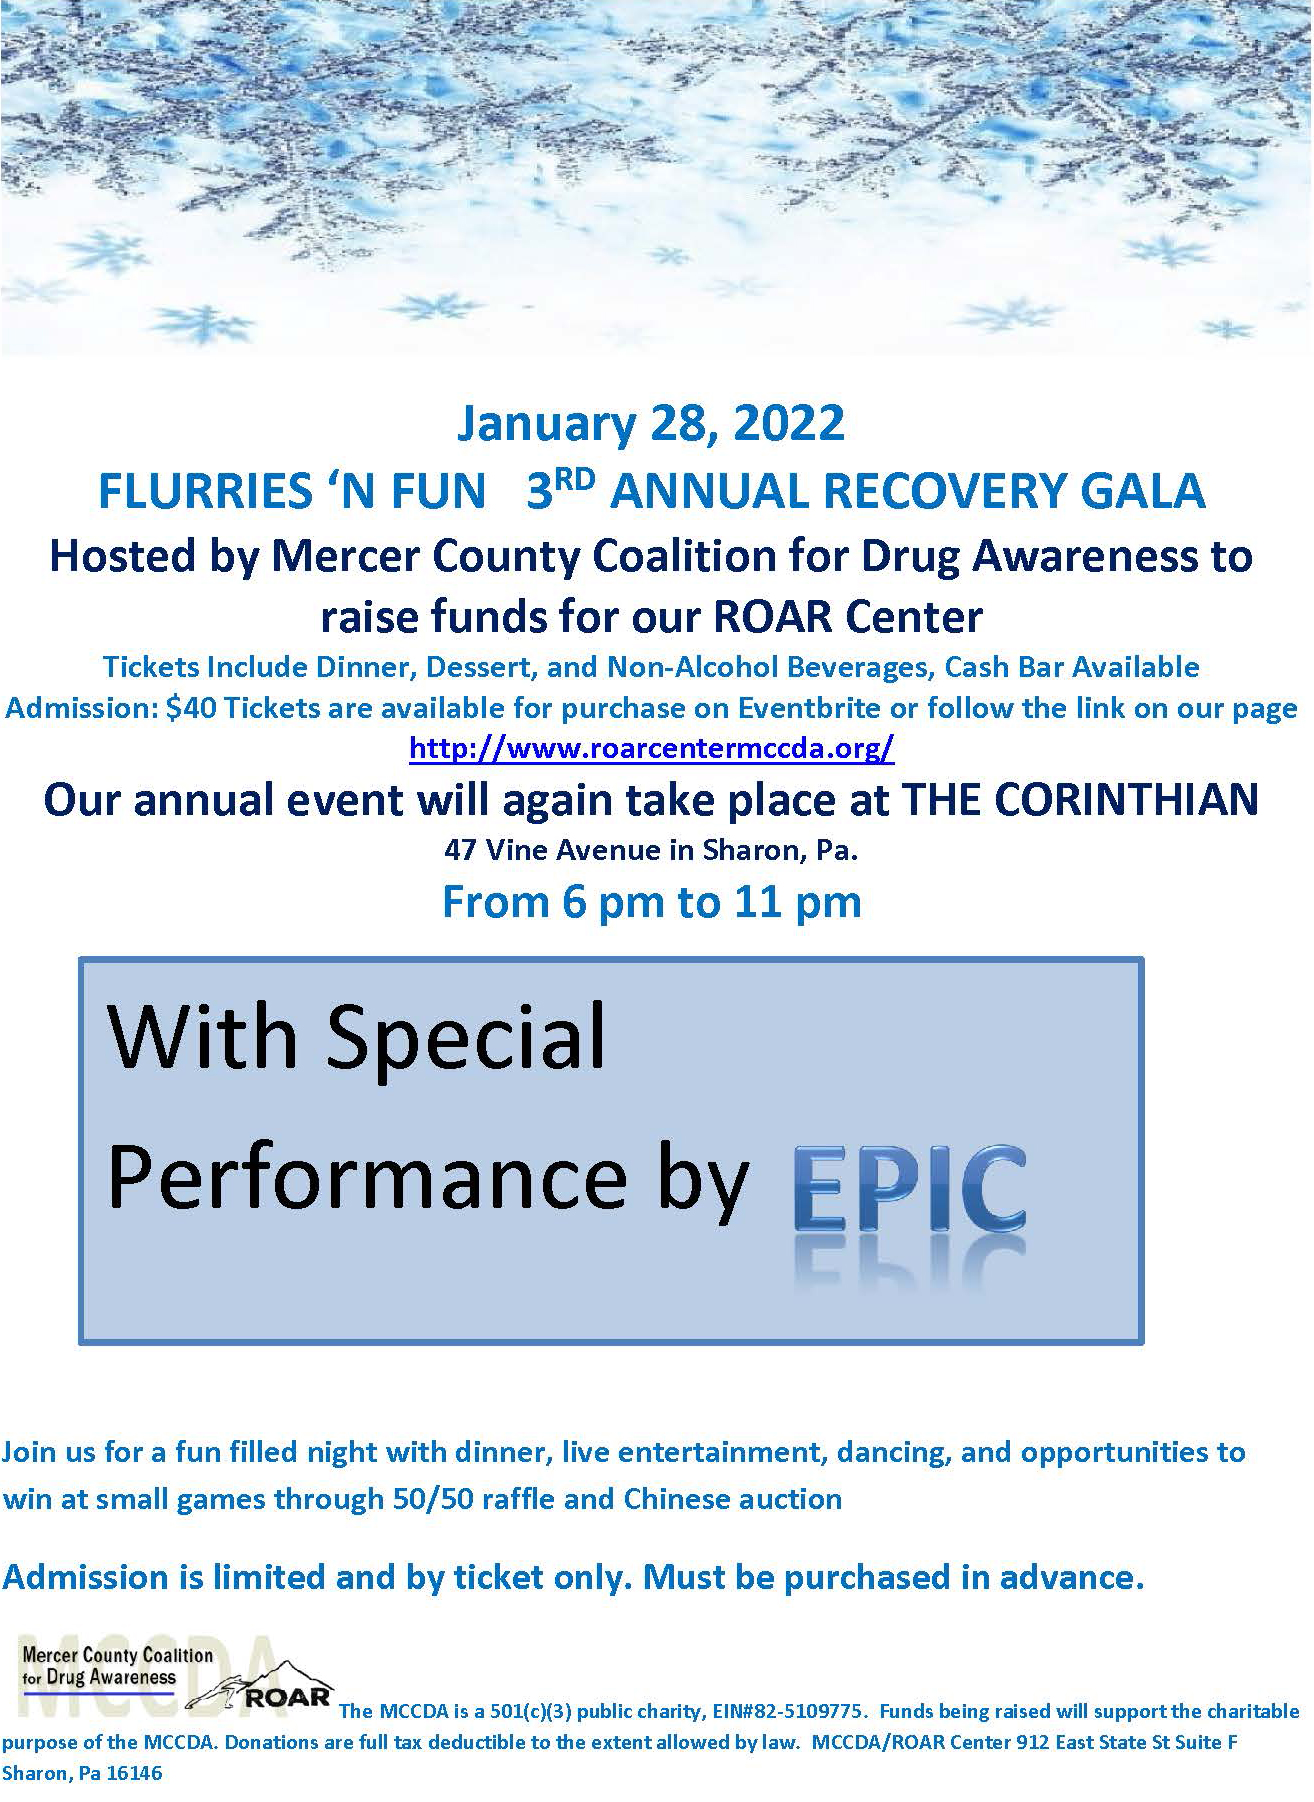 Flurries 'N Fun 3rd annual recovery gala